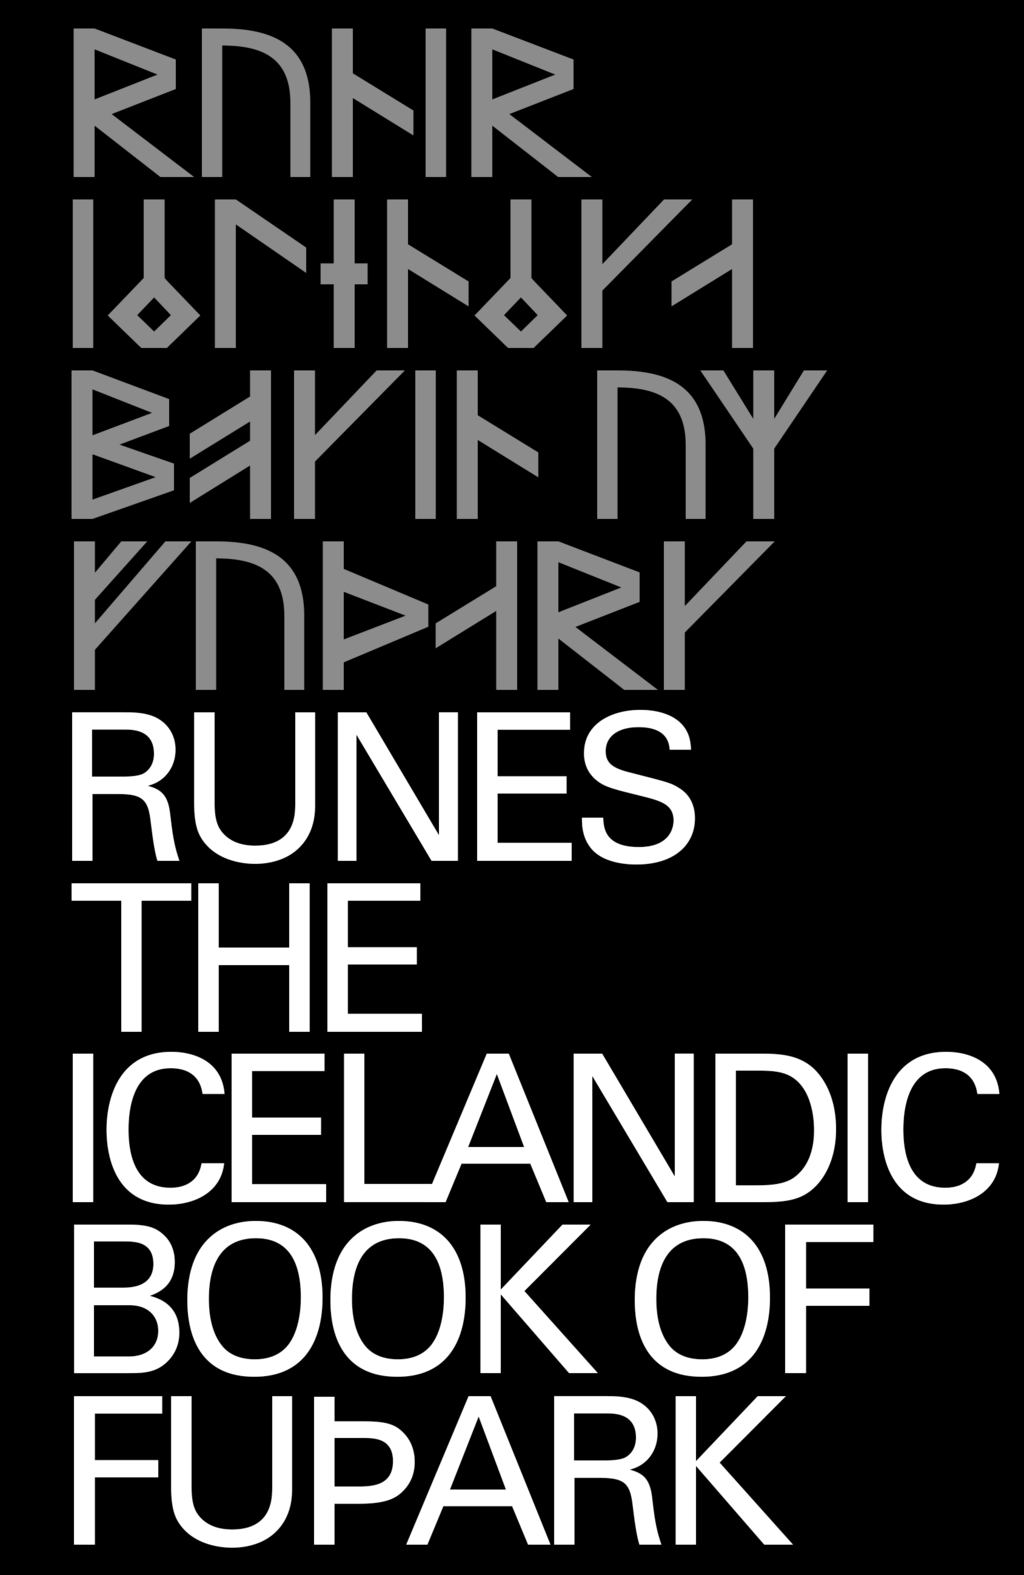 icelandic runes